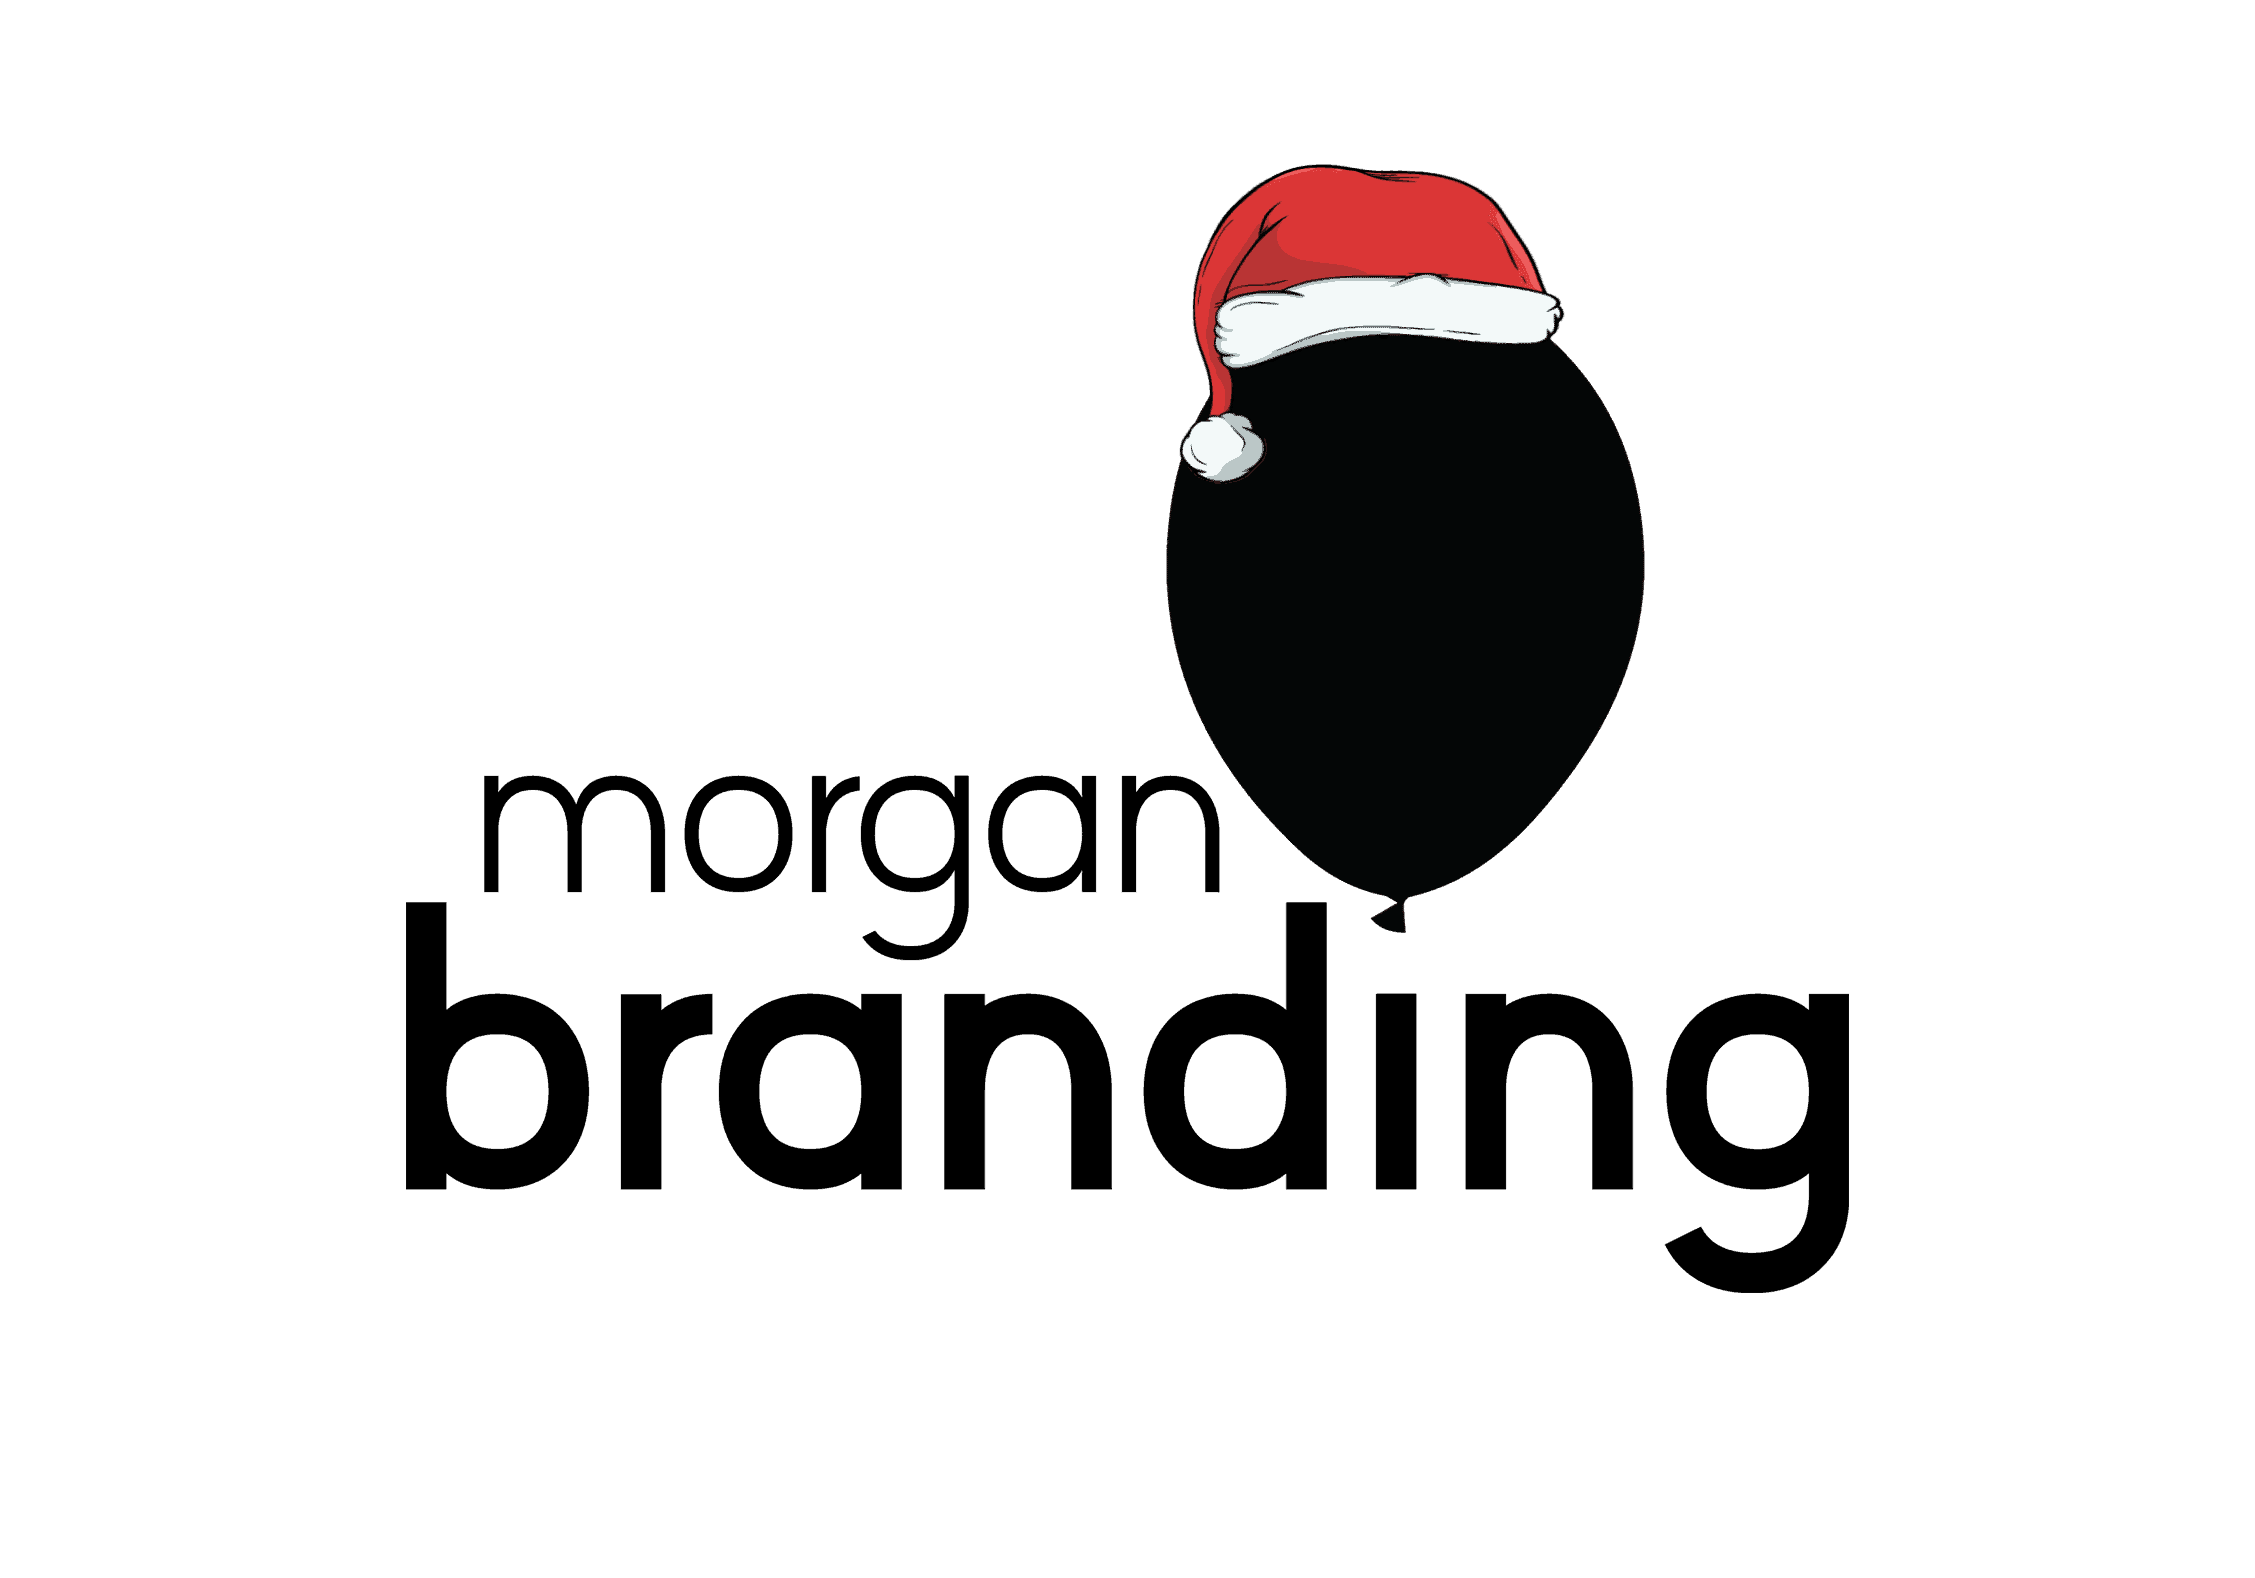 Morgan branding